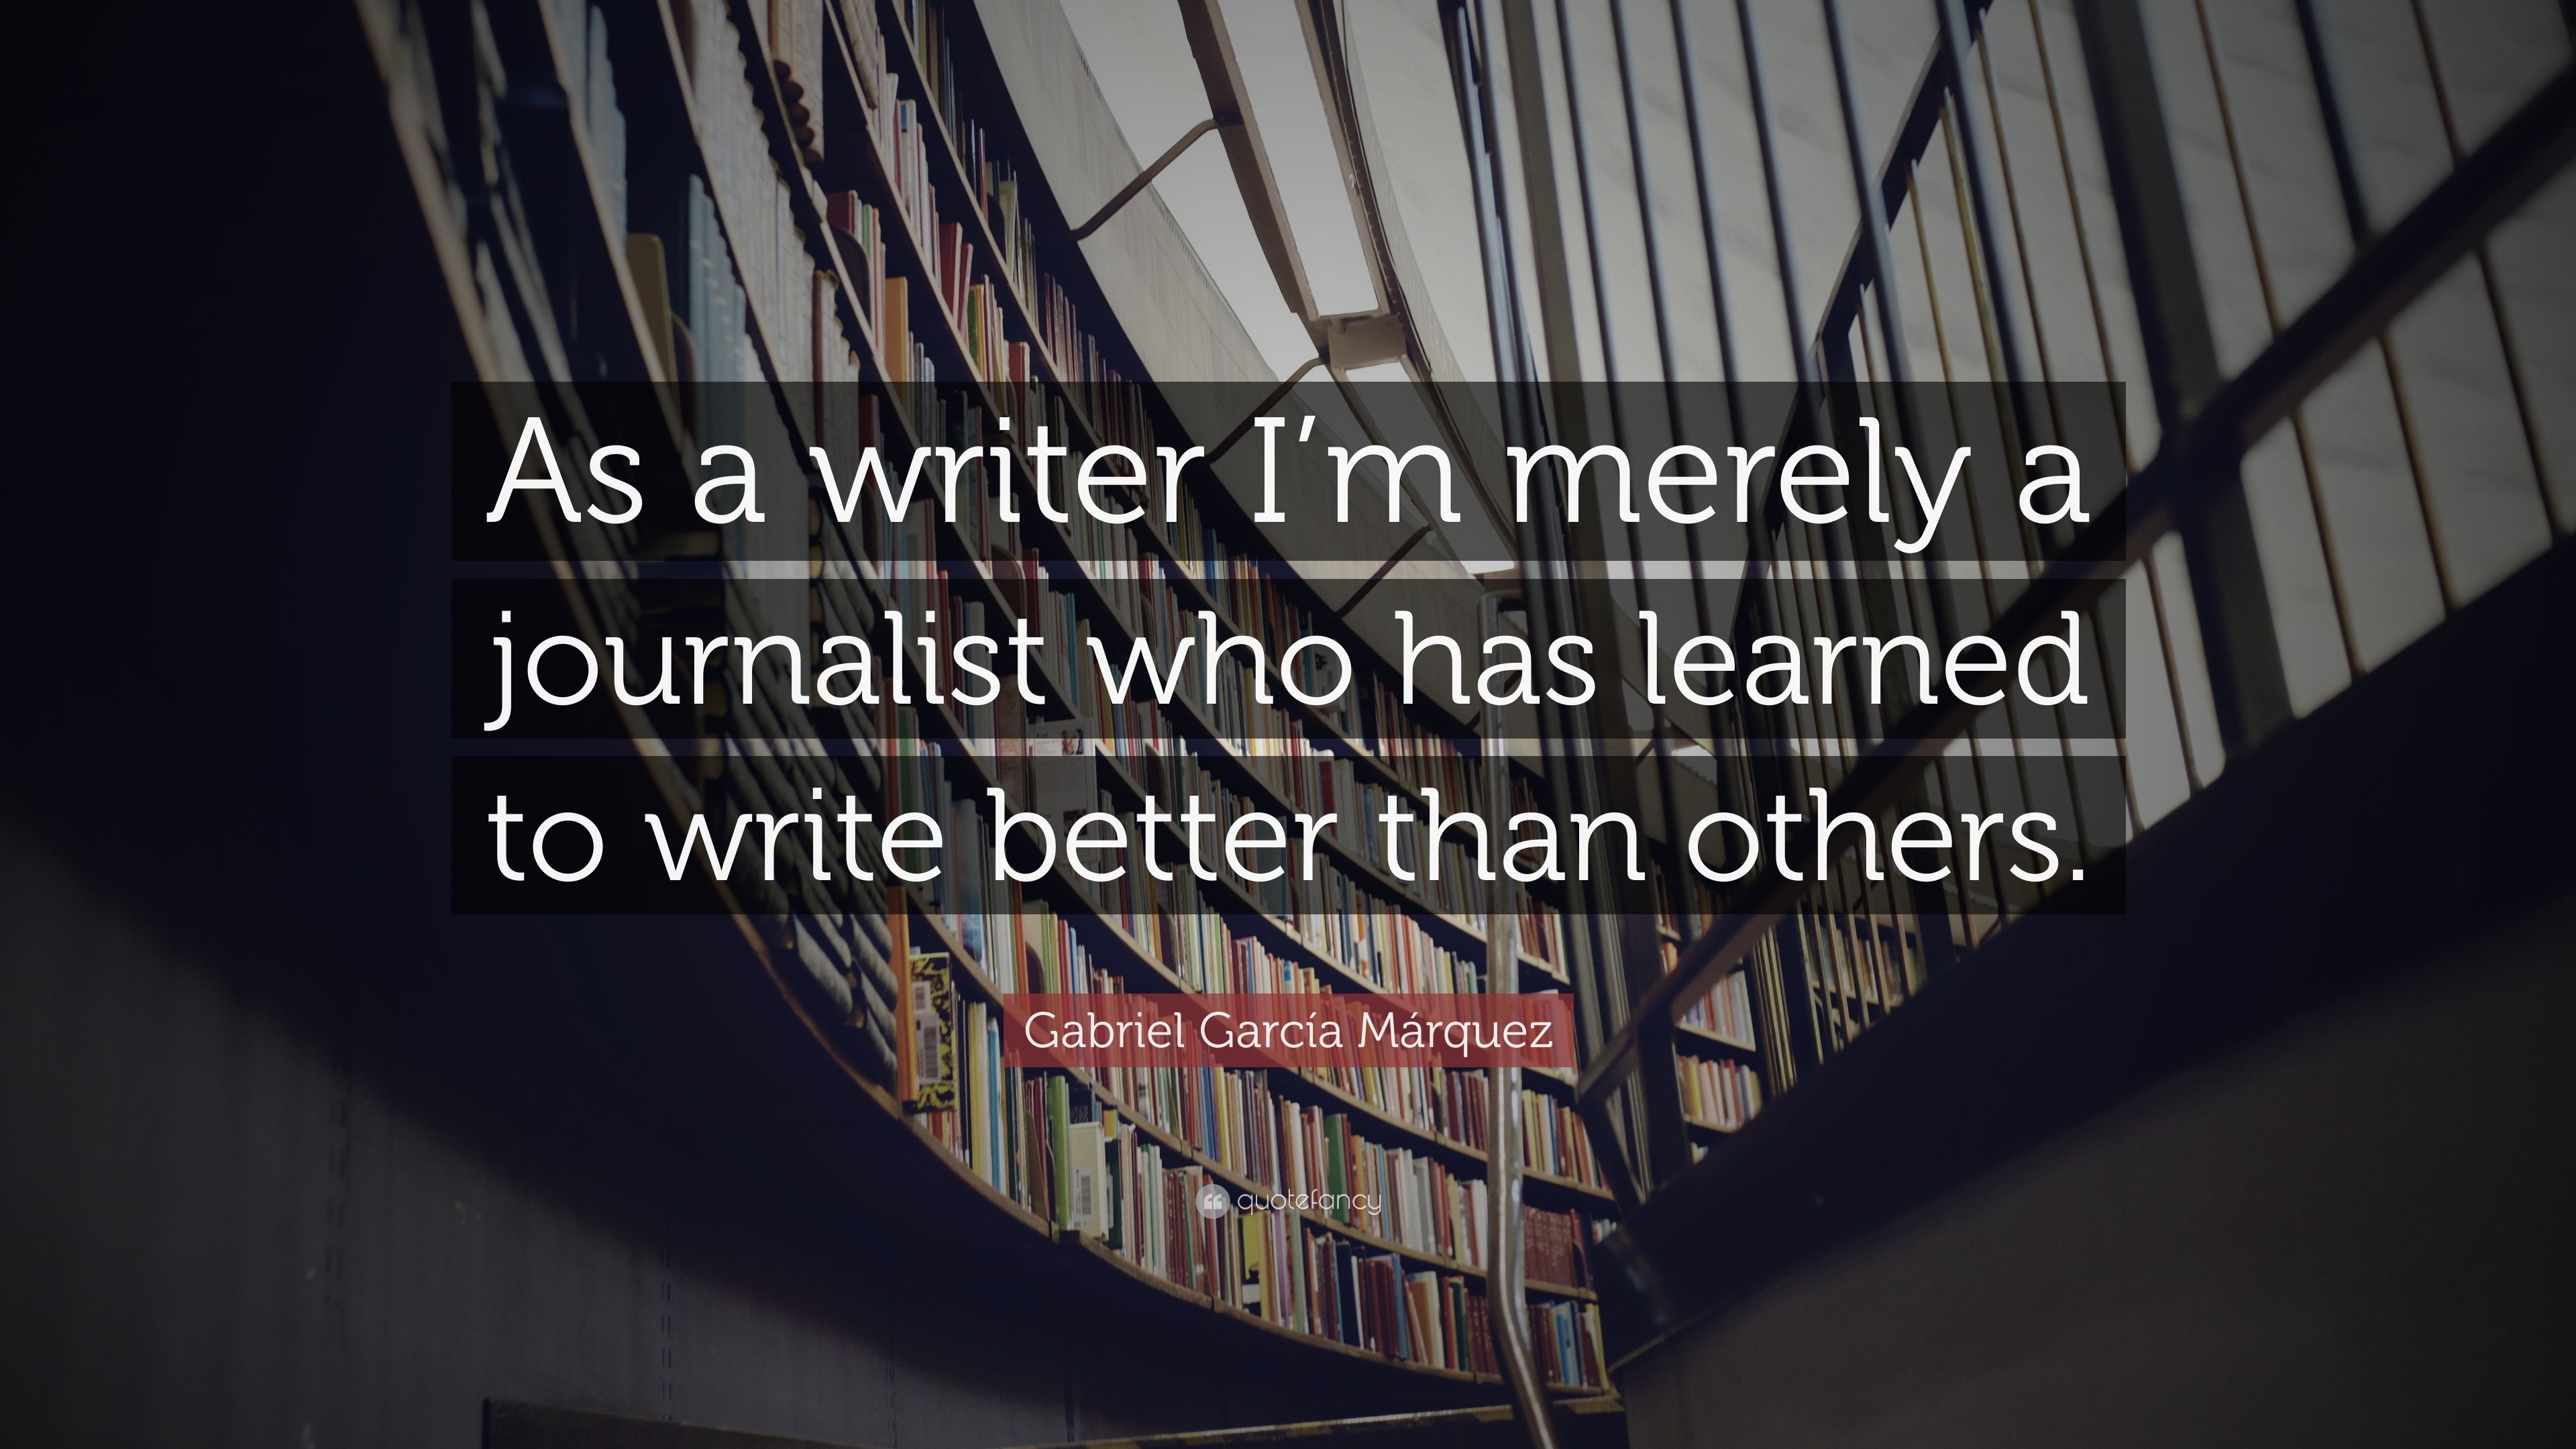 Gabriel García Márquez Quote: “As a writer I'm merely a journalist